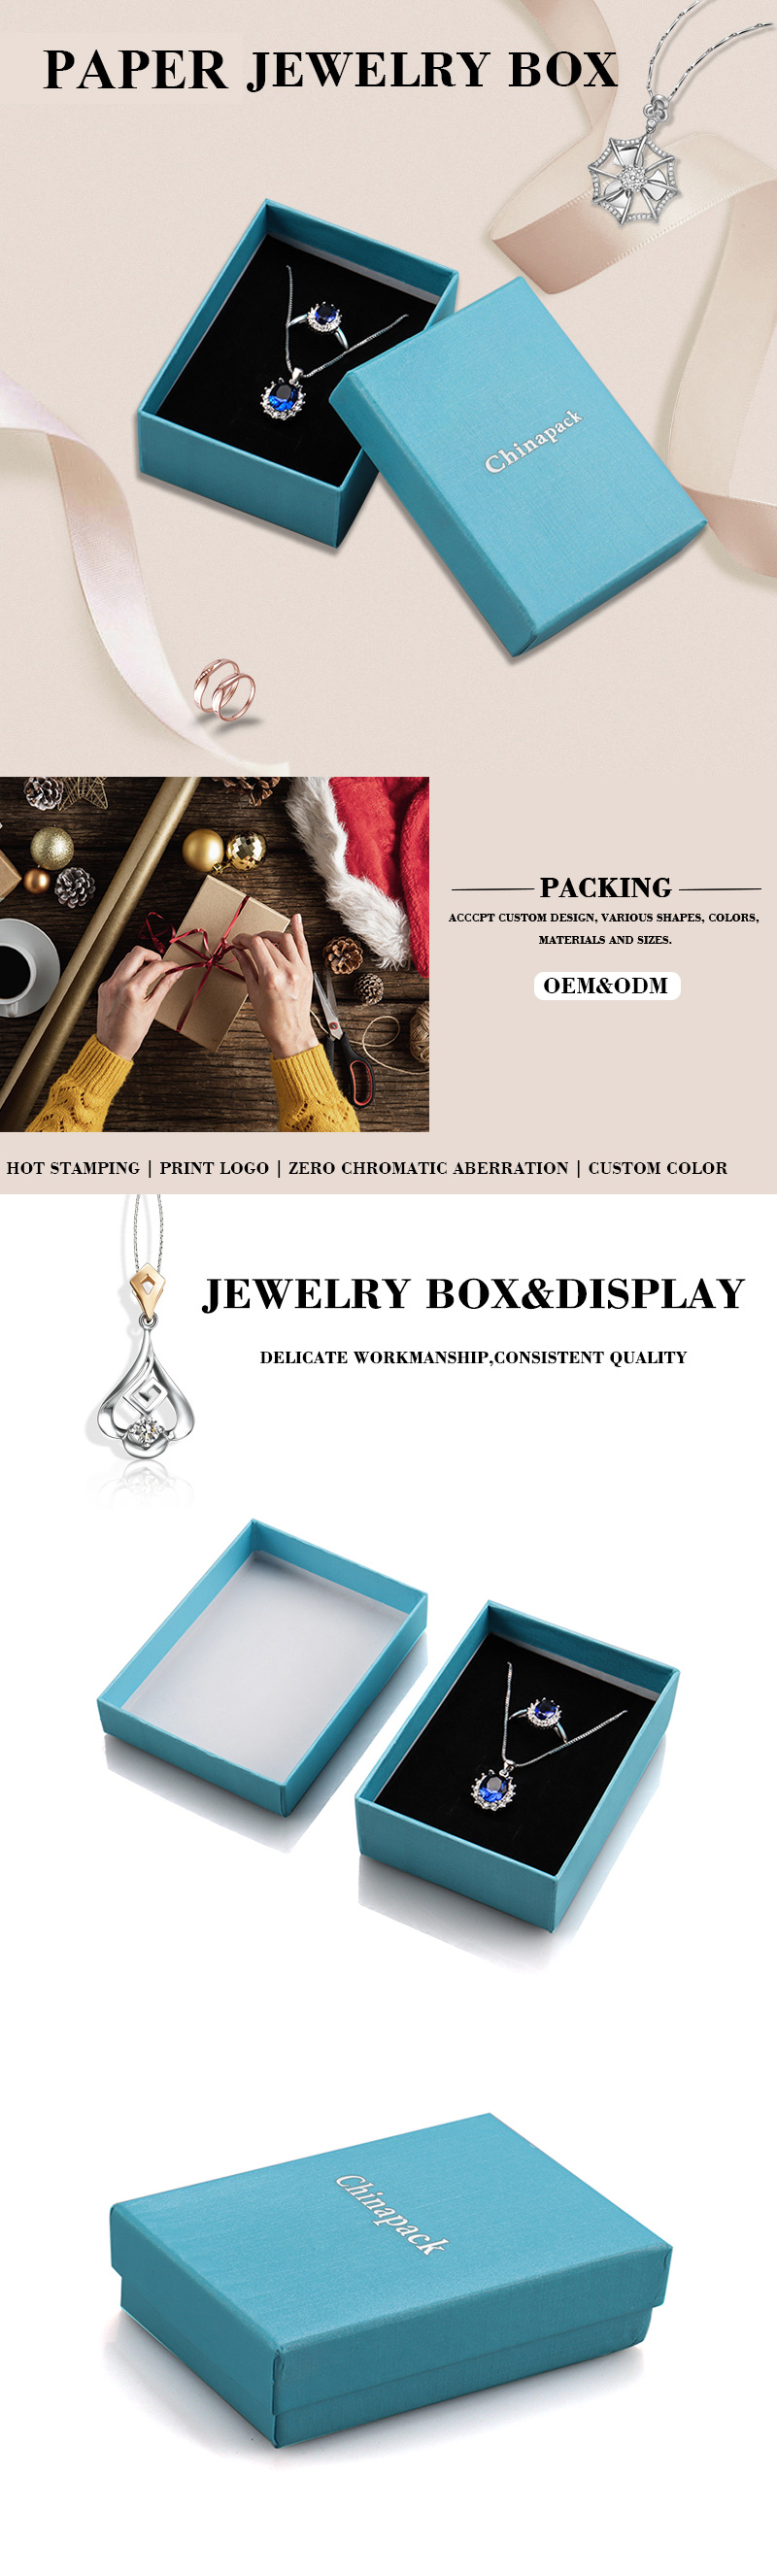 Custom printed jewelry boxes